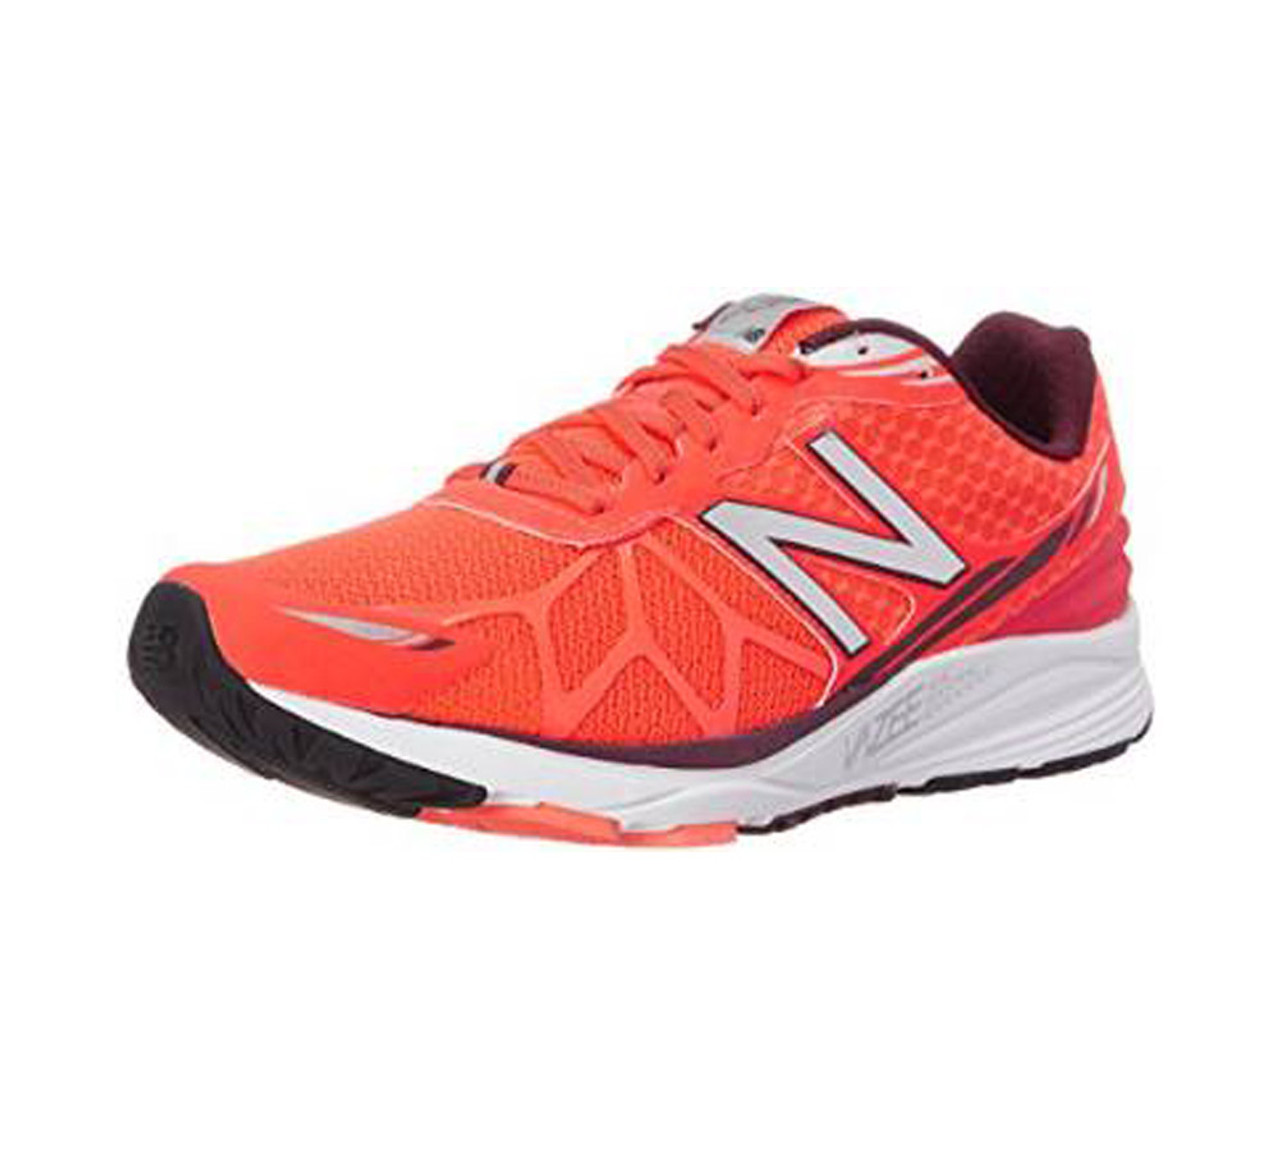 New Balance Men's Vazee Pace Running Shoe - Orange | Discount New Balance  Men's Shoes & More - Shoolu.com | Shoolu.com